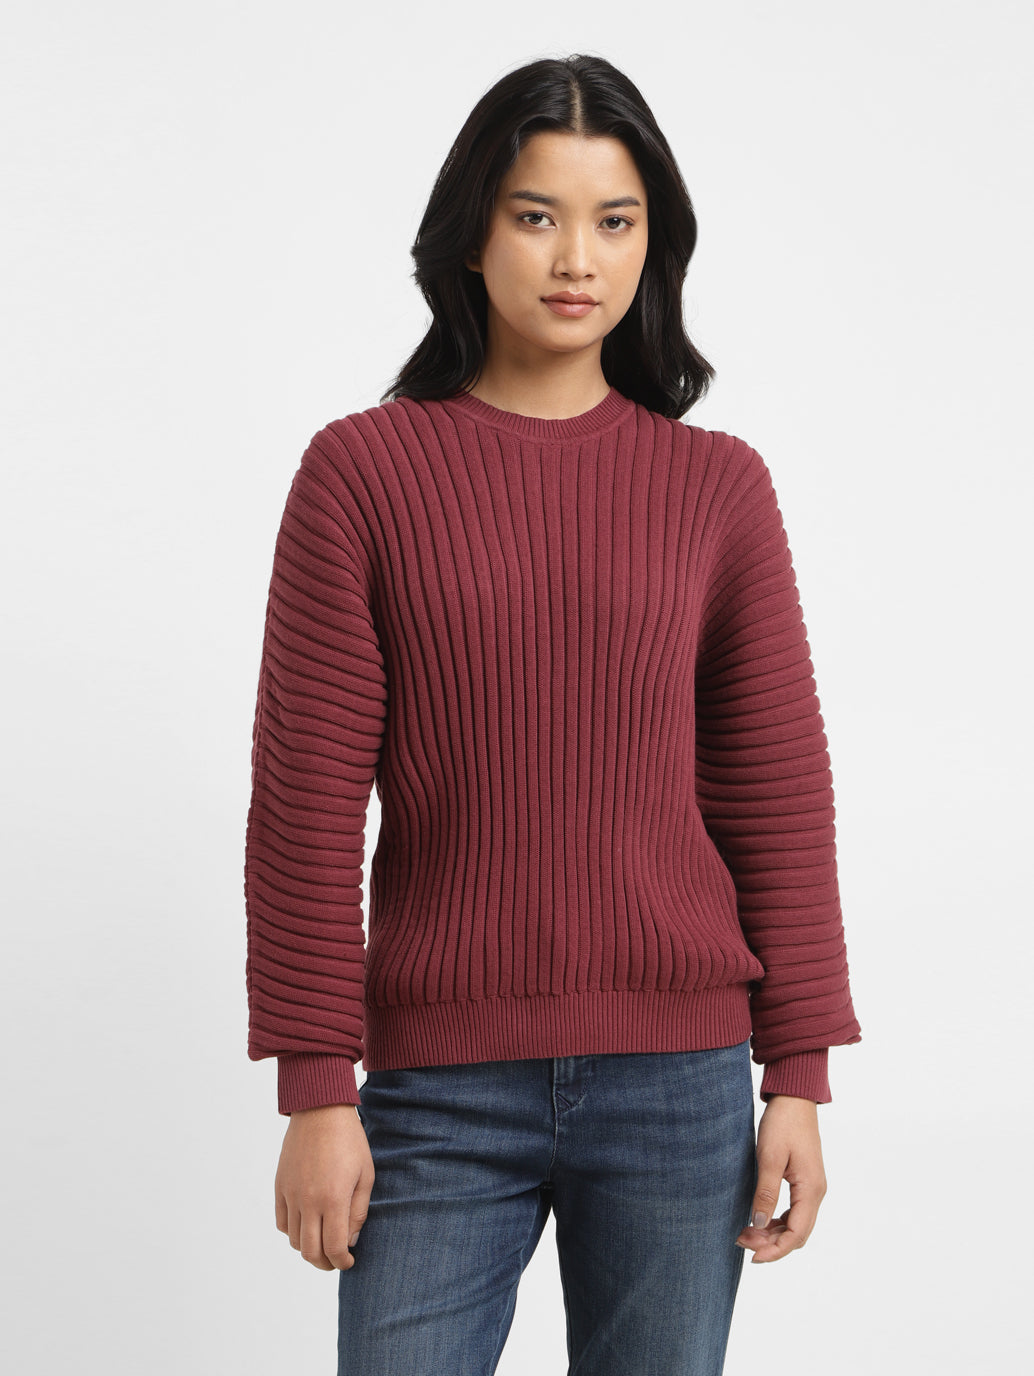 Women's Self Design Maroon Crew Neck Sweater